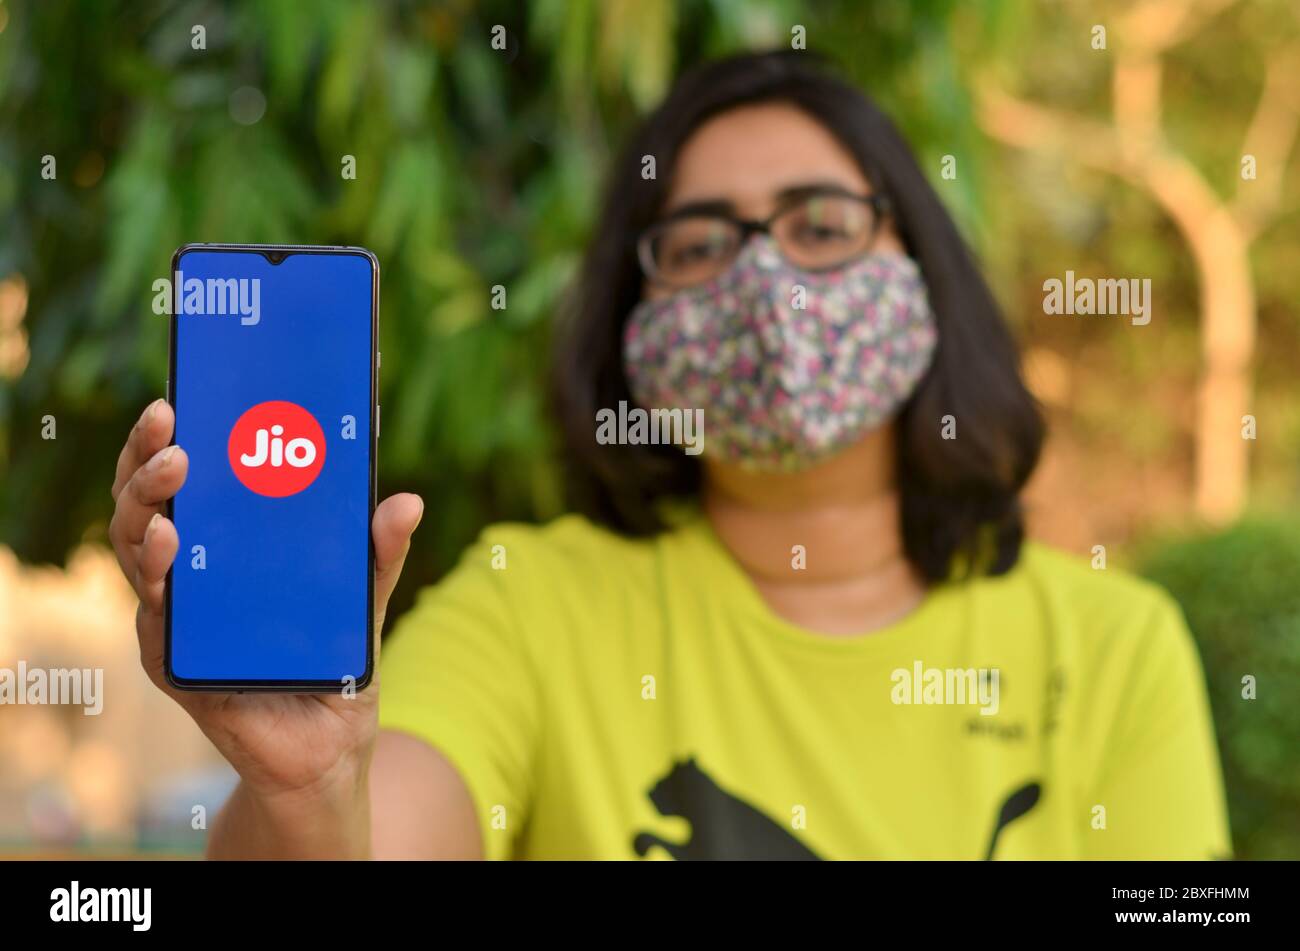 Mumbai, India, 2020. Girl wearing face mask showing Reliance Jio landing page on her mobile screen during Corona Virus (Covid-19) pandemic. Internet u Stock Photo